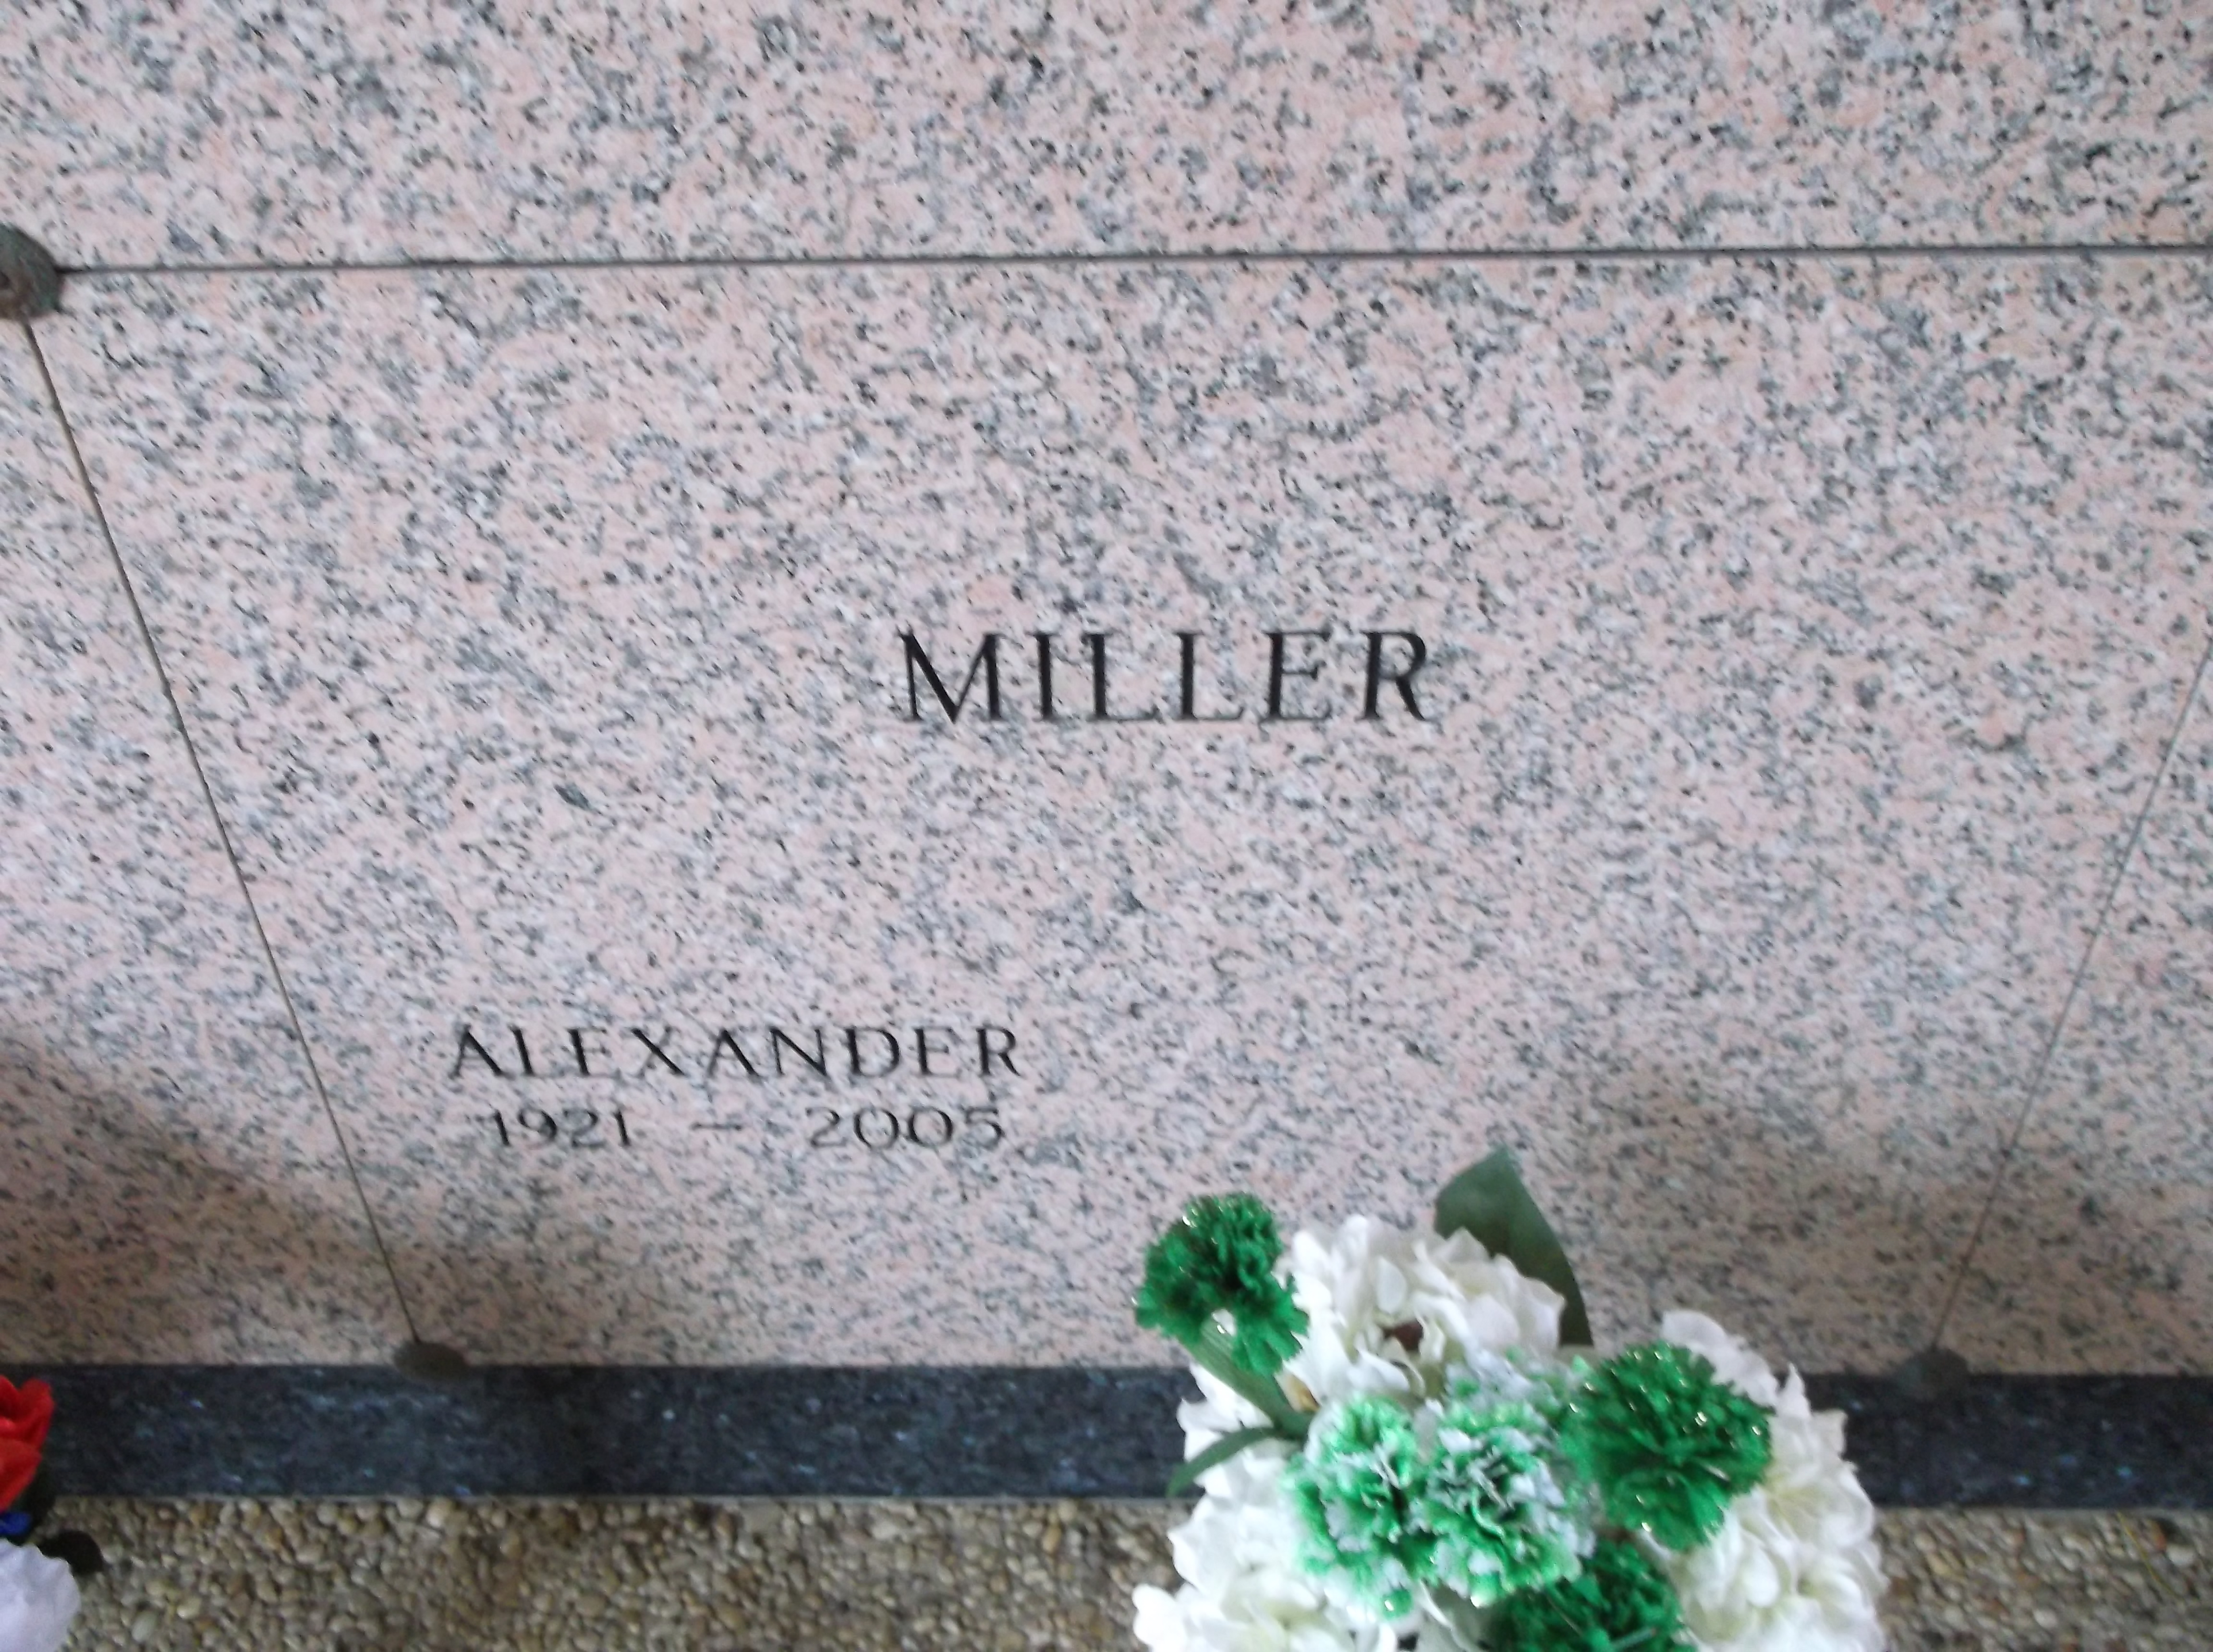 Alexander Miller